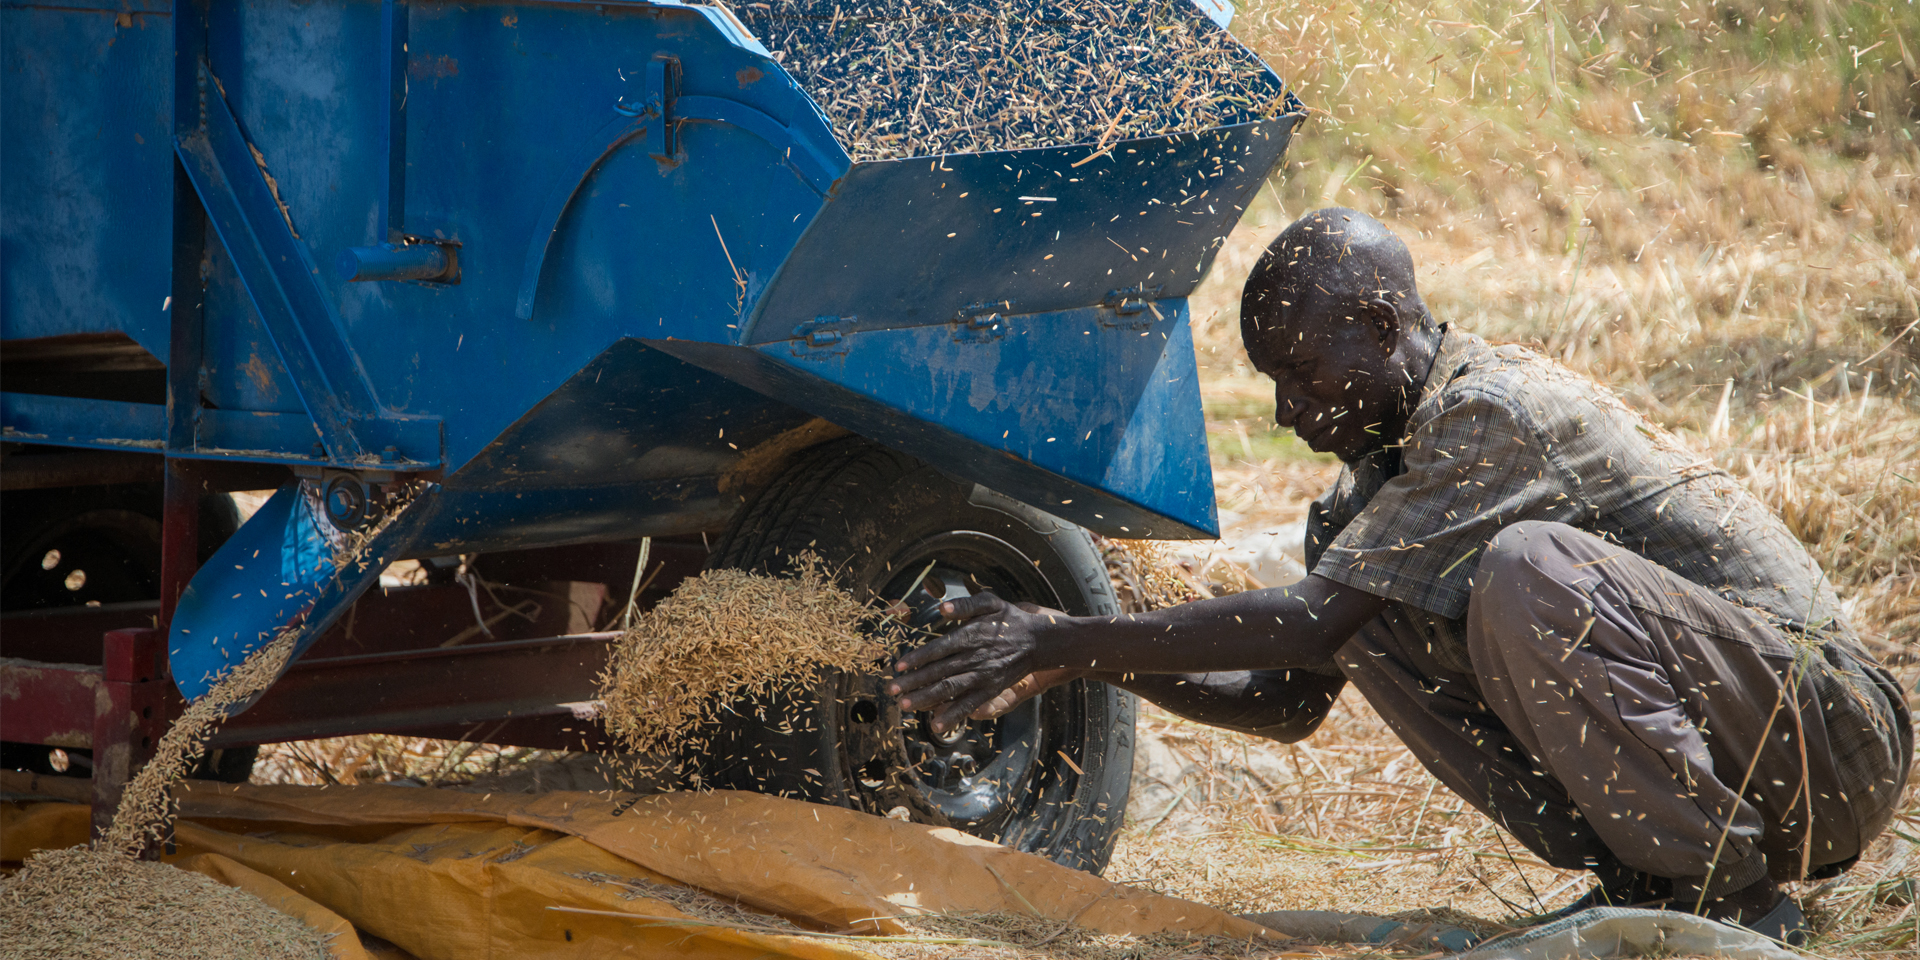 A man kneeling below a harvester that is dispersing grain. He is throwing a pile of grain onto a pile beside him.